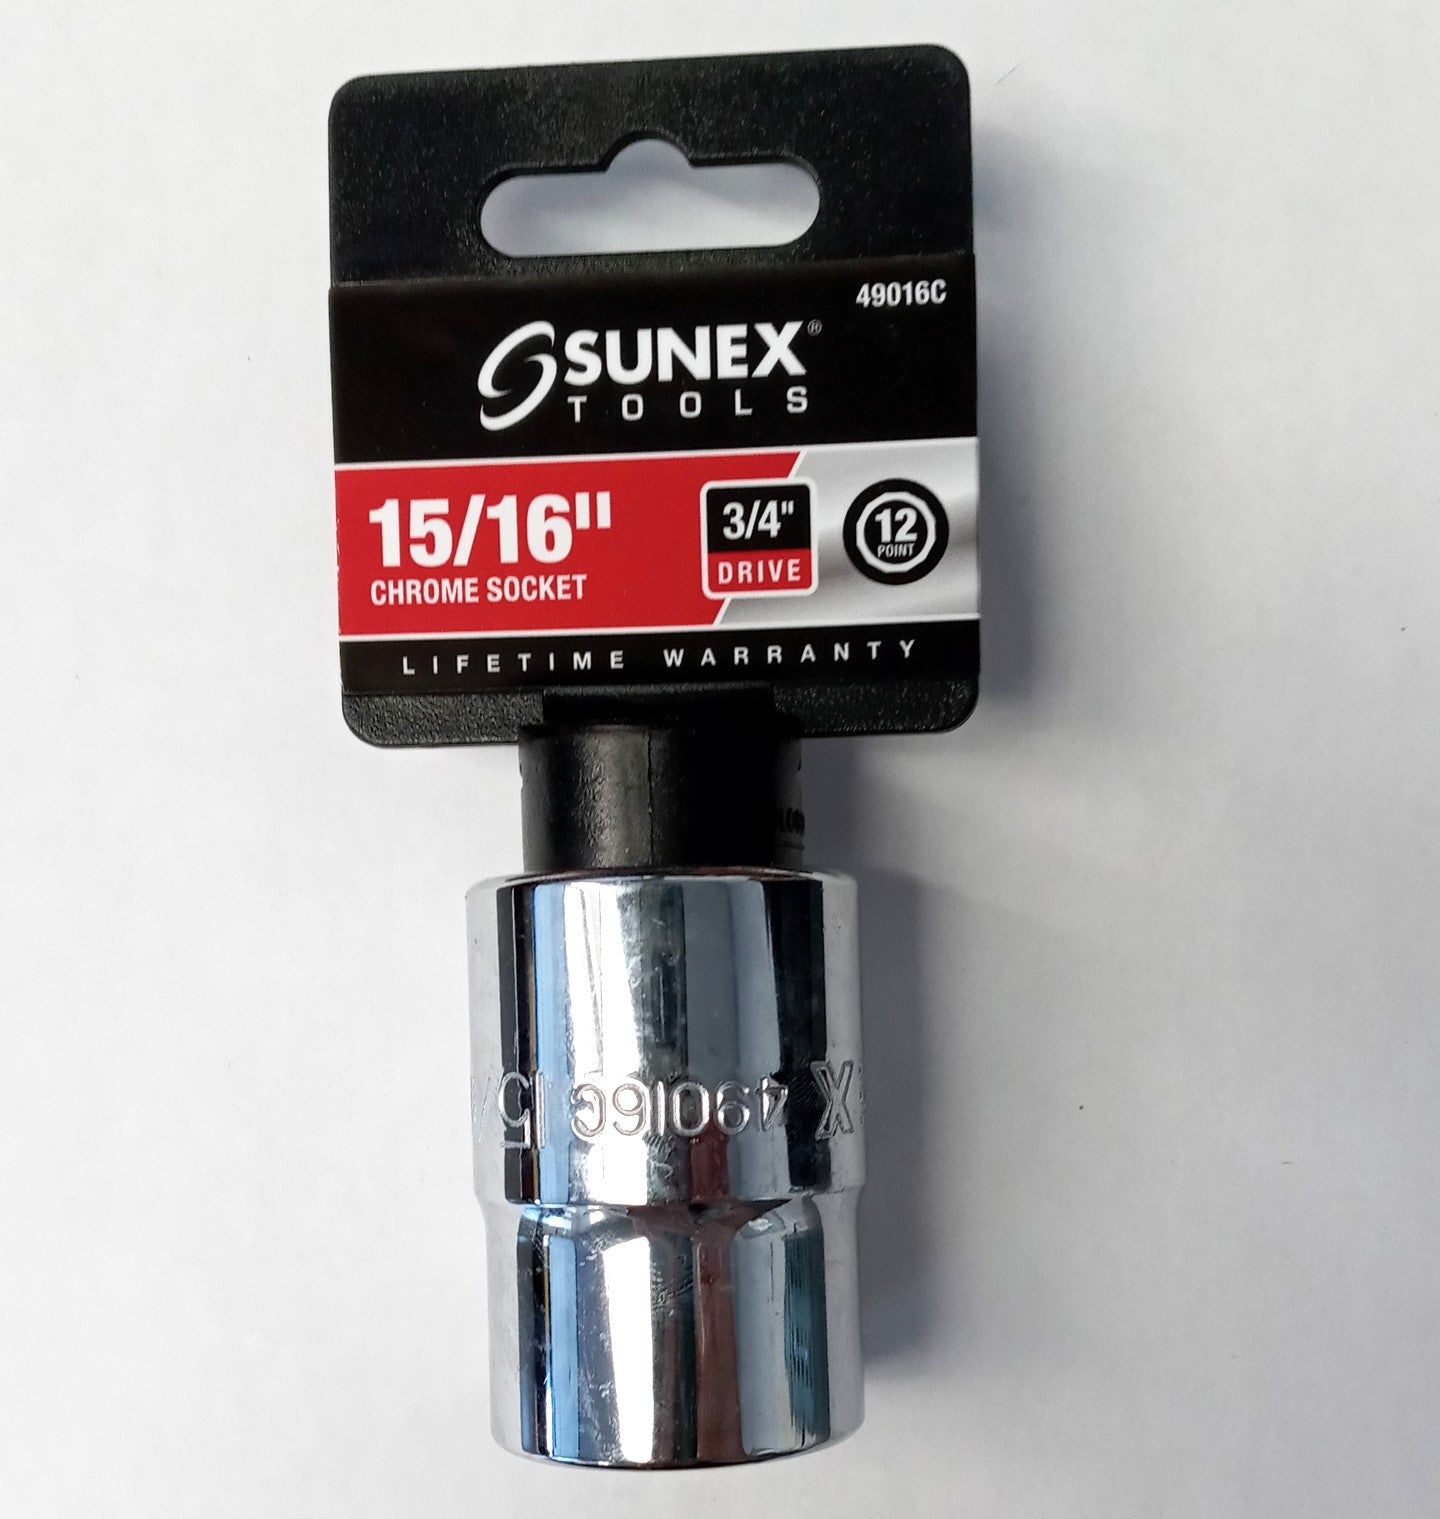 Sunex 49016C 3/4" Drive 15/16" Socket 12 Point